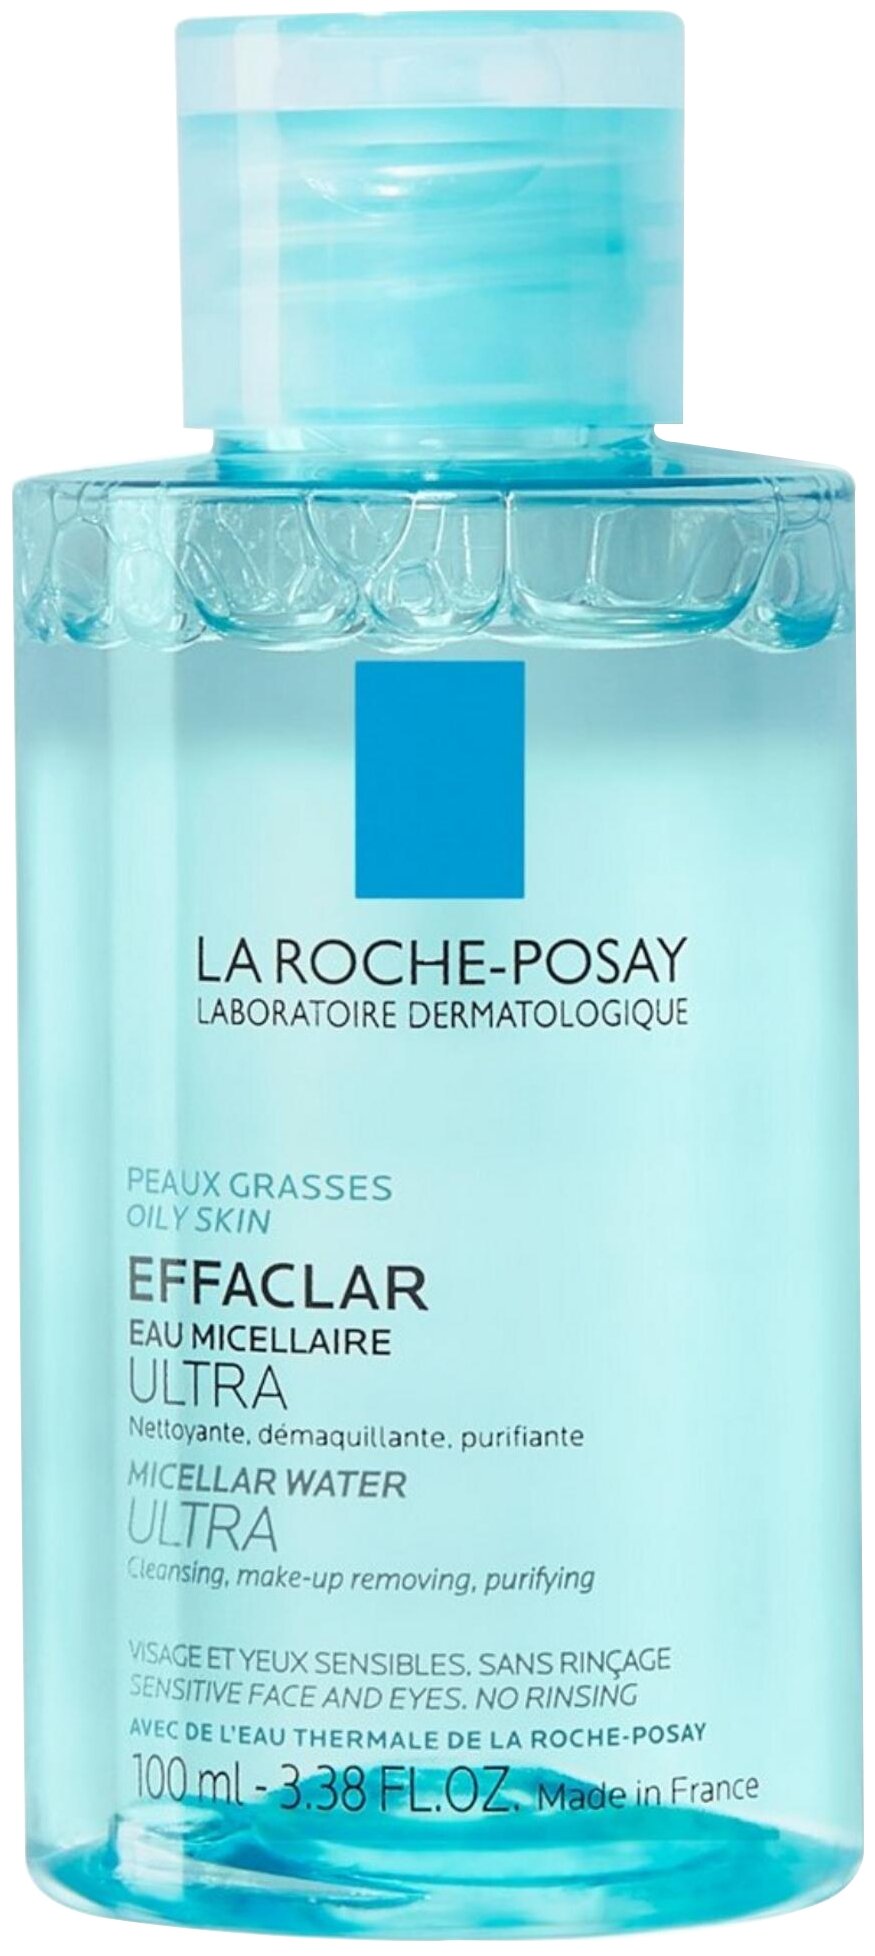 Is La Roche Posay a clean brand?